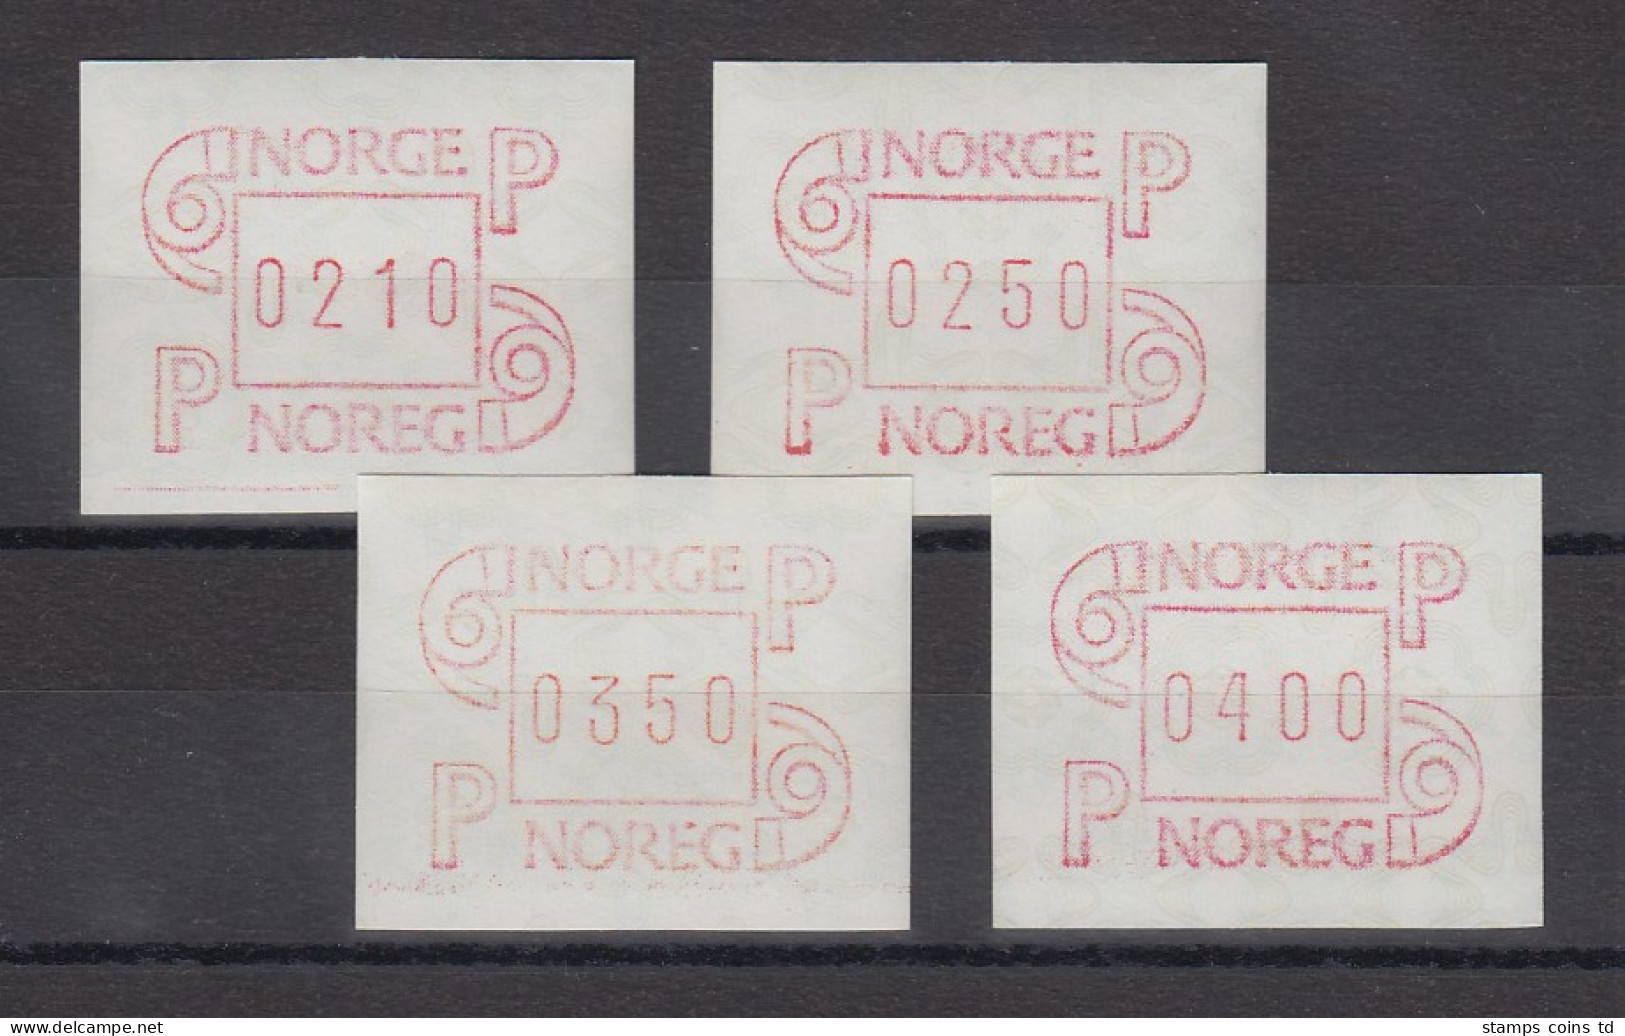 Norwegen 1986 FRAMA-ATM Mi.-Nr. 3.1b Satz 210-250-350-400 ** - Machine Labels [ATM]